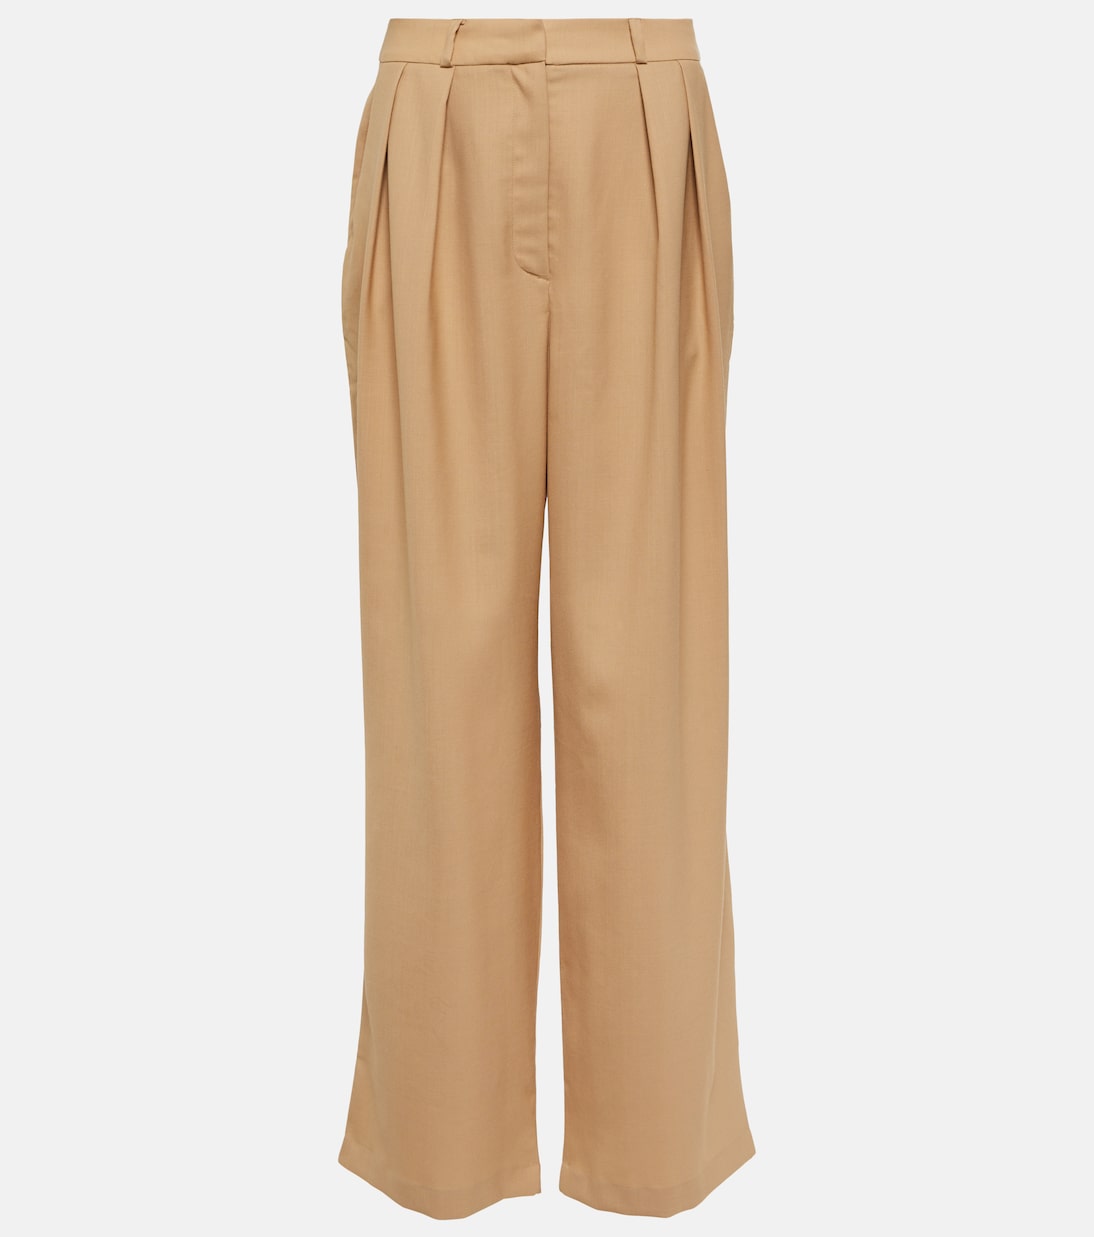 цена Широкие брюки из твила со складками tansy The Frankie Shop, коричневый